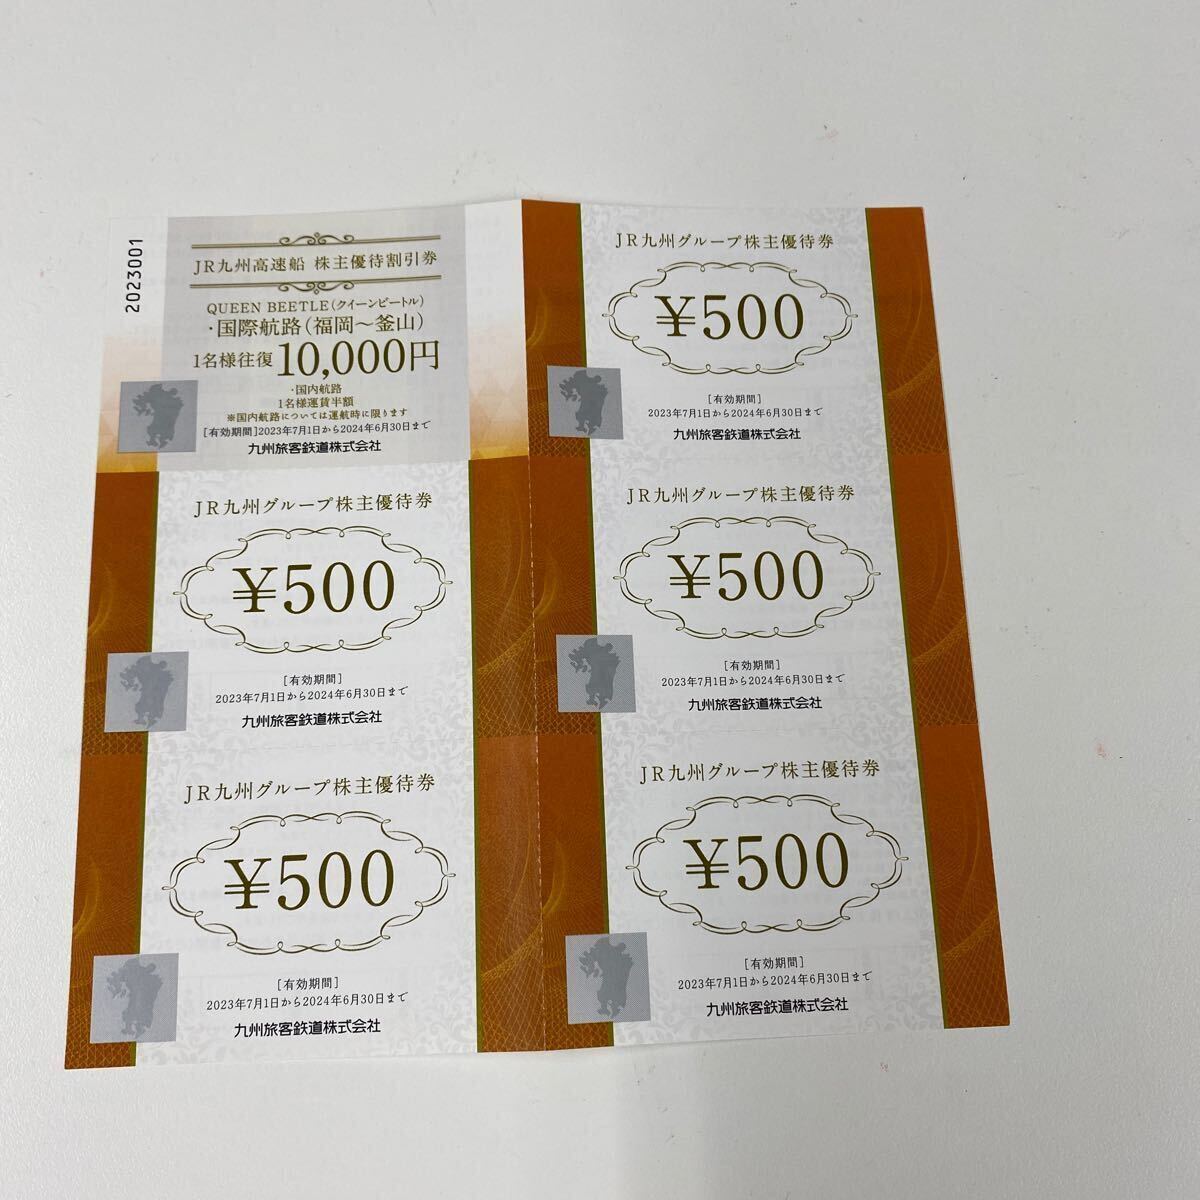 jr Kyushu stockholder hospitality 1 day passenger ticket 2024 year 6 month 30 until the day 